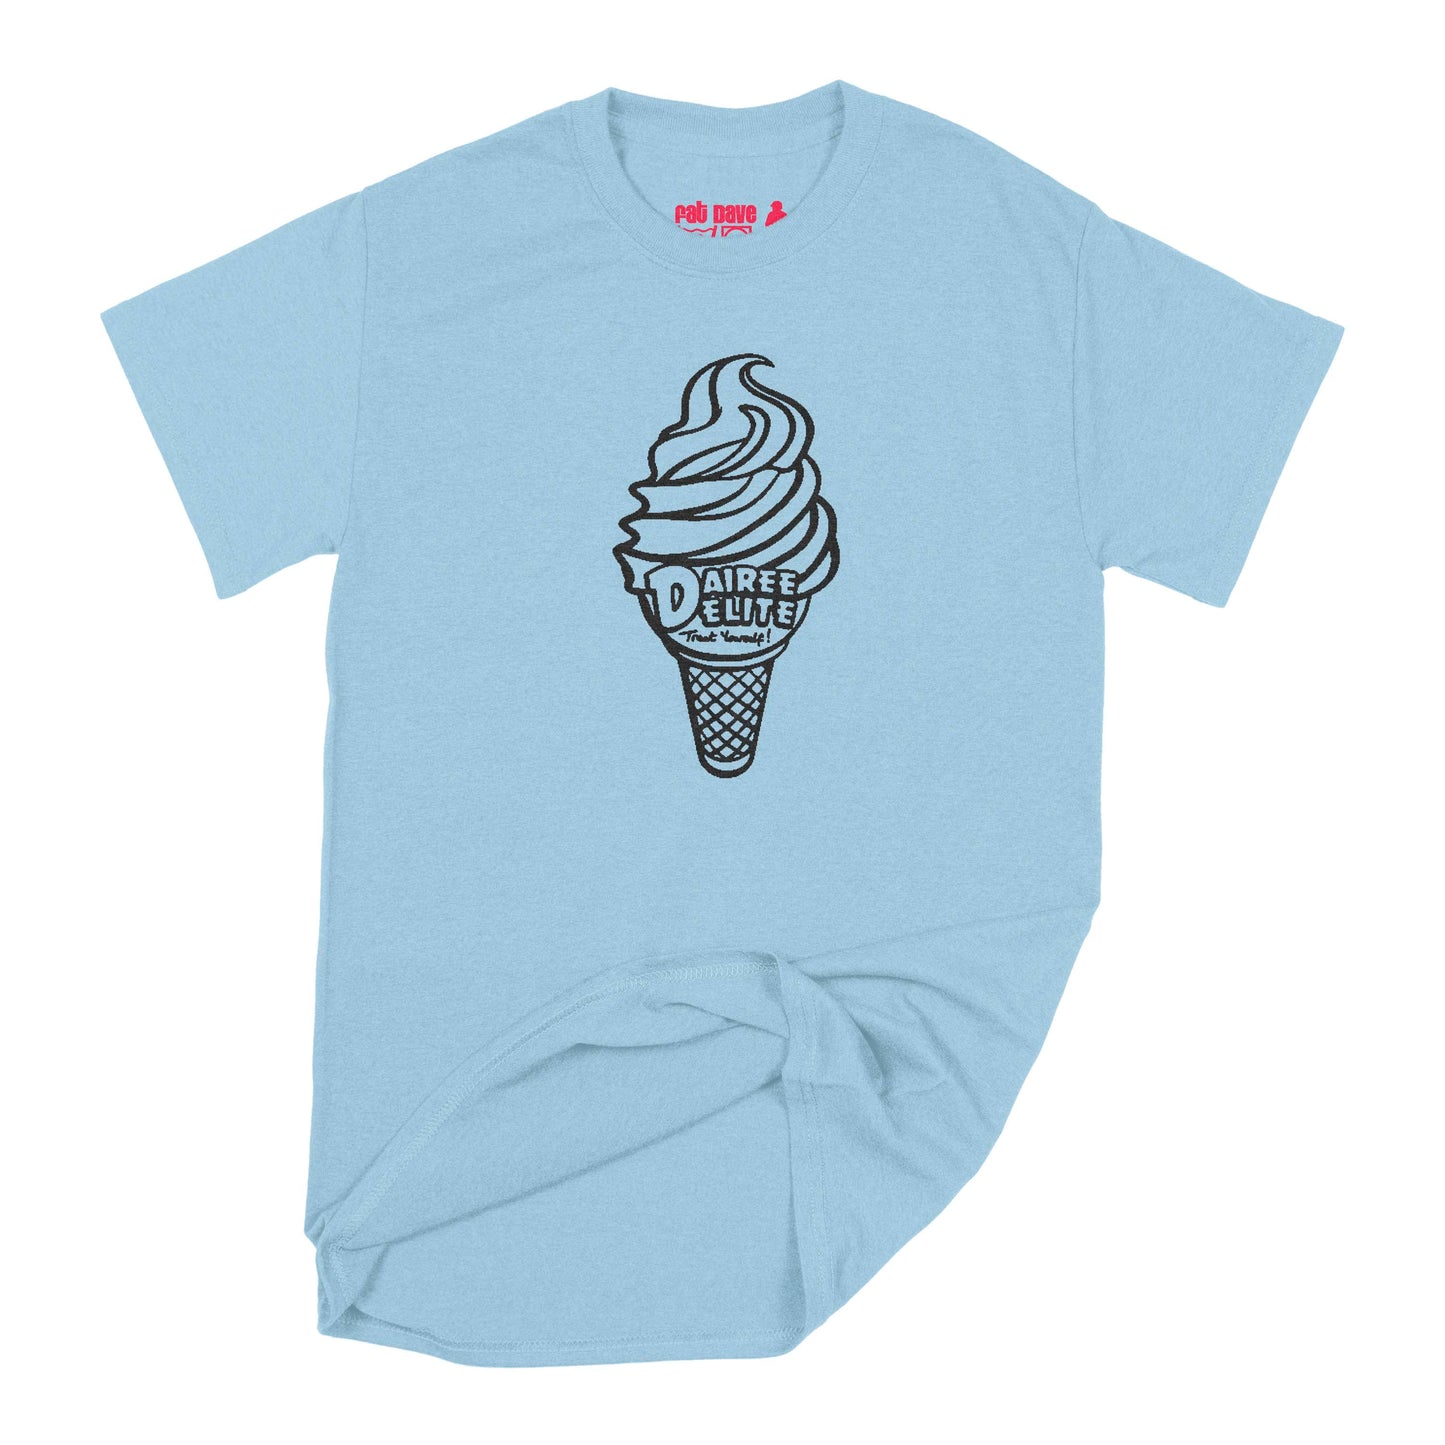 Dairee Delite 70th Anniversary Treat Yourself Cone T-Shirt Small Light Blue